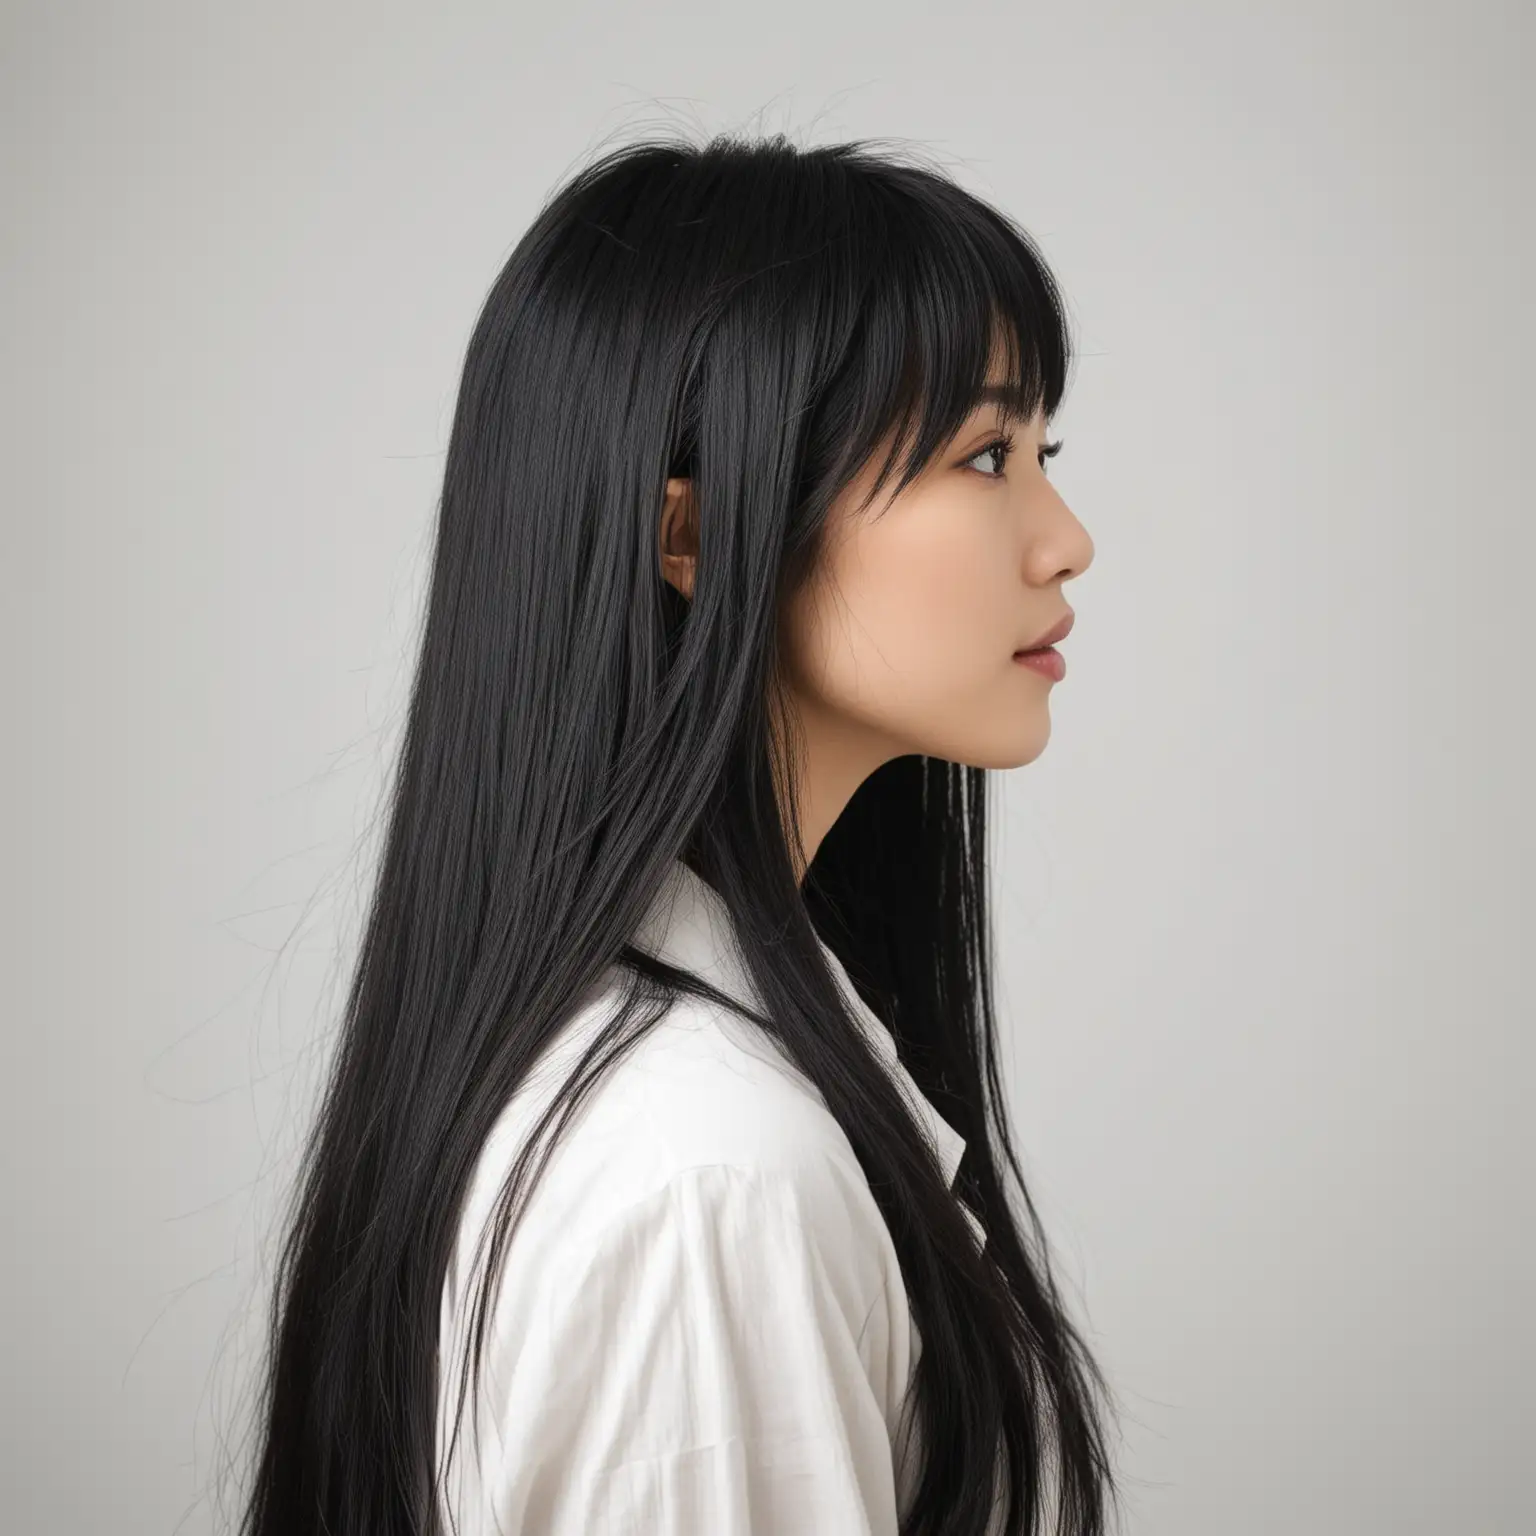 Portrait photograph, side profile view, beautiful Japanese woman, profile view, long black hair, long bangs, white background